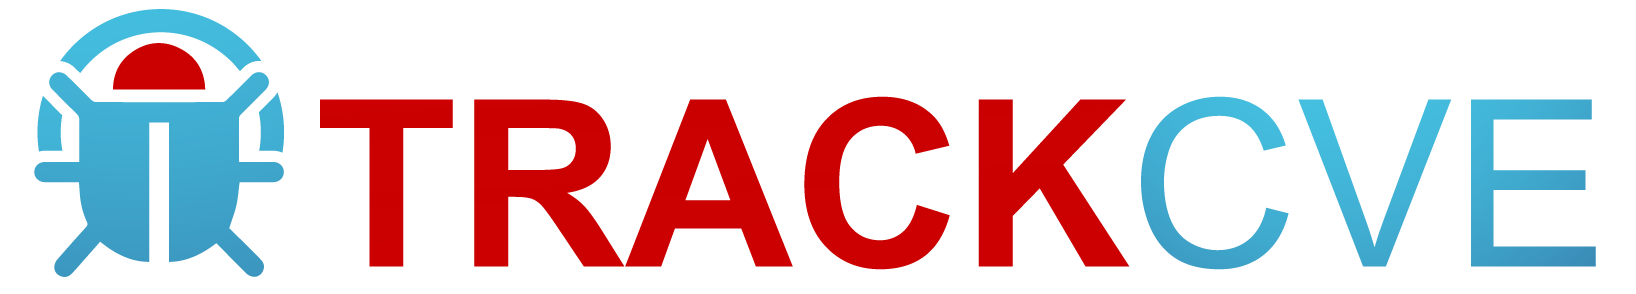 trackcve_logo